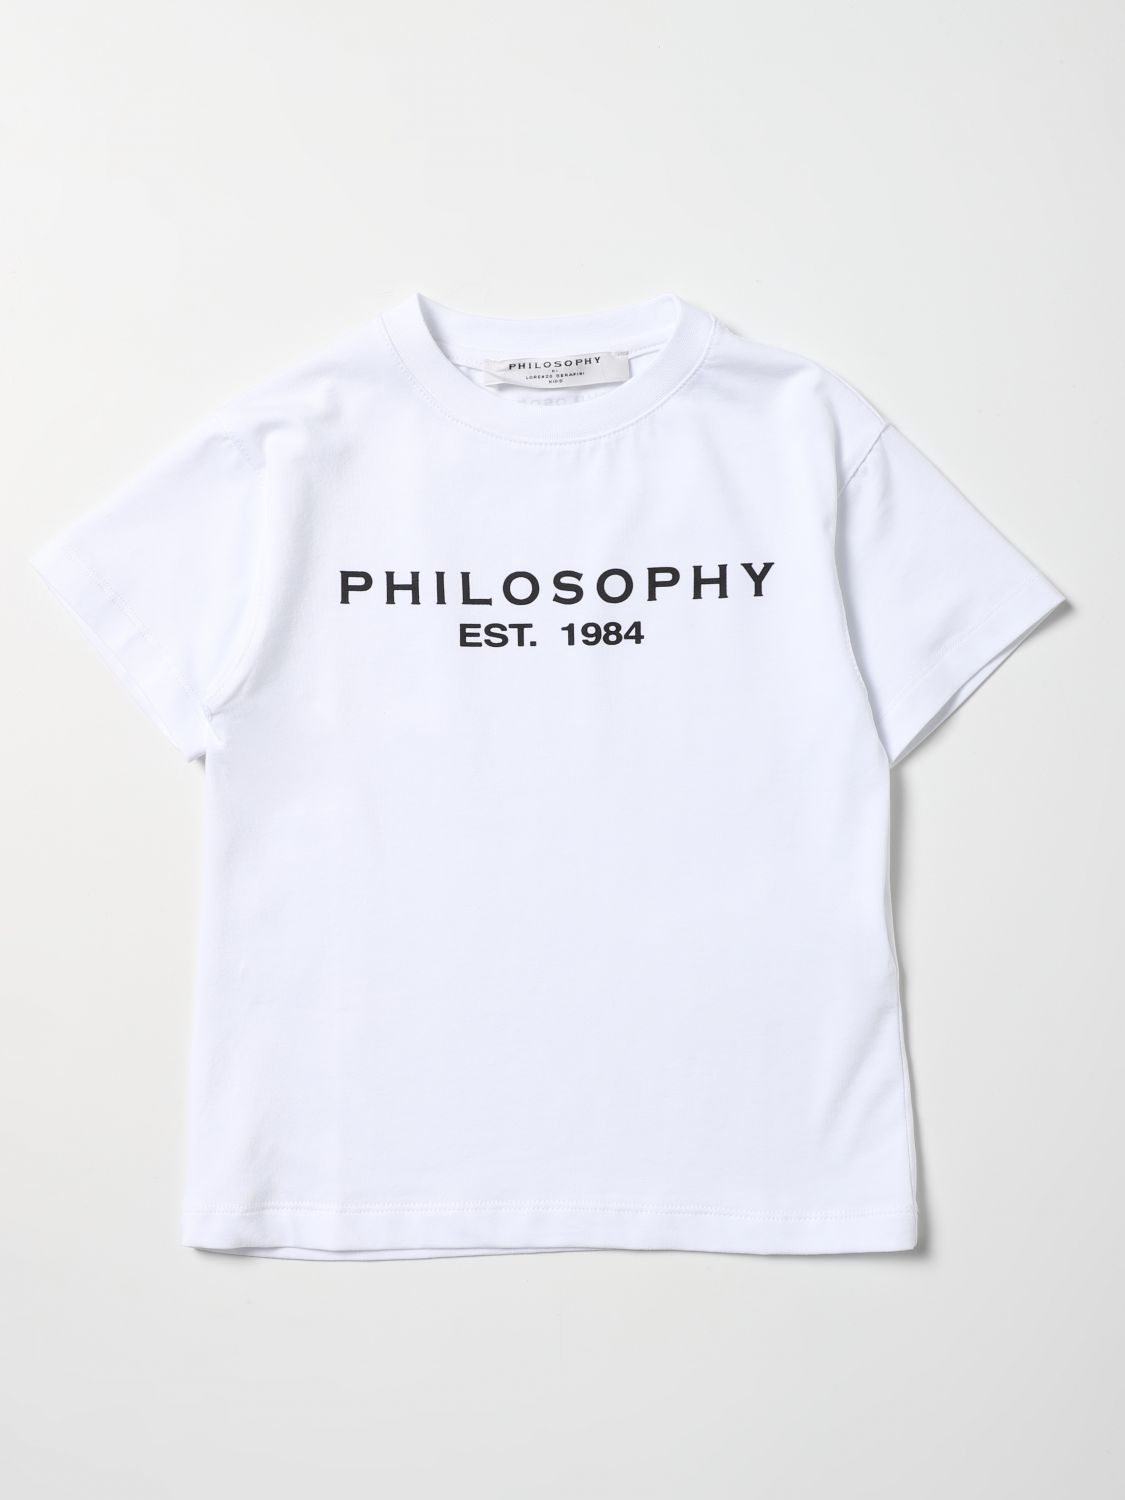 T-Shirt Philosophy Di Lorenzo Serafini: Philosophy Di Lorenzo Serafini Mädchen T-Shirt weiß 1